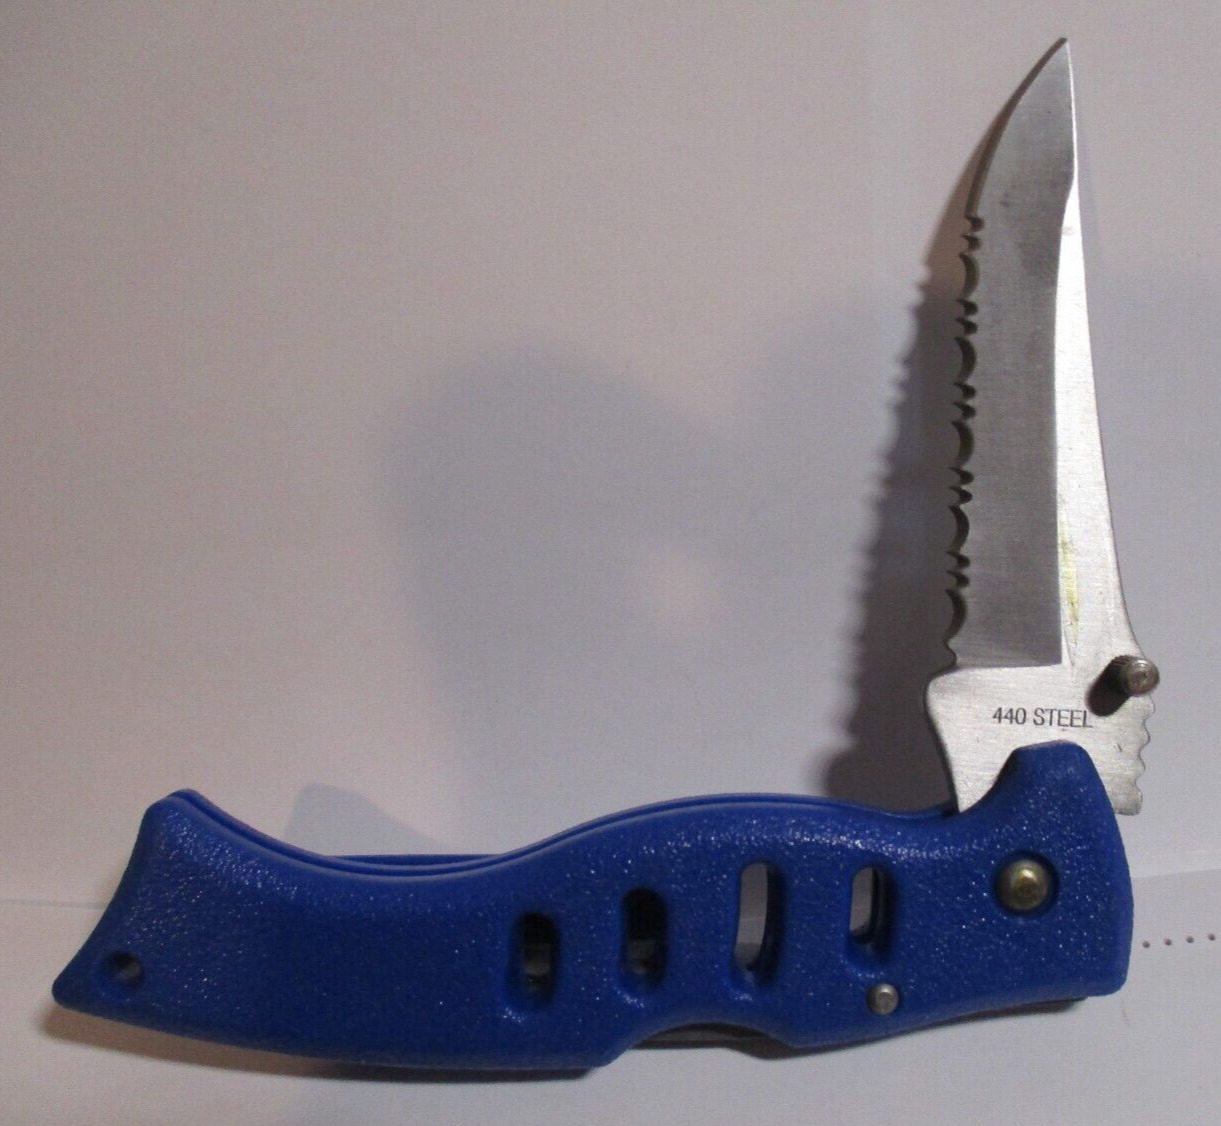 NEW -  Serrated Blade - Blue Pocket Folding Pocket Knife-  440 Stainless Steel